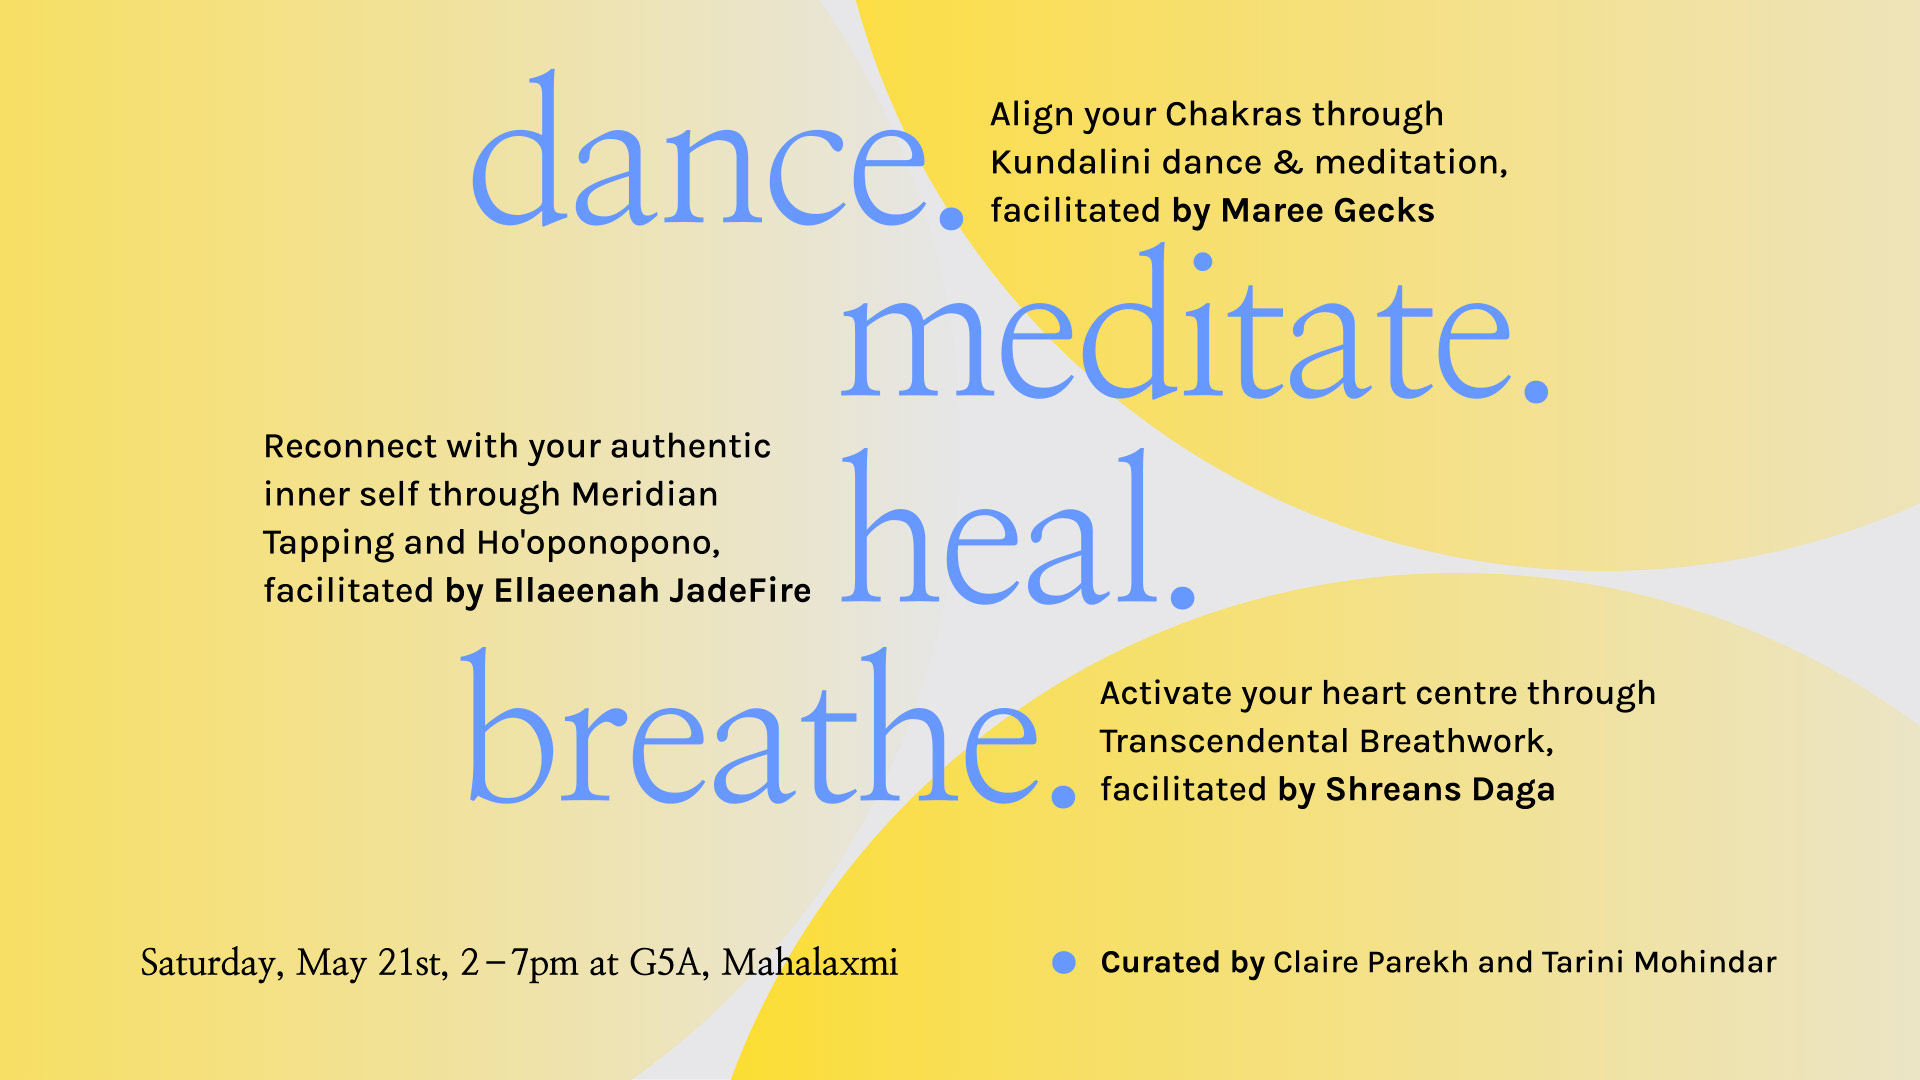 Dance. Meditate. Heal. Breathe.